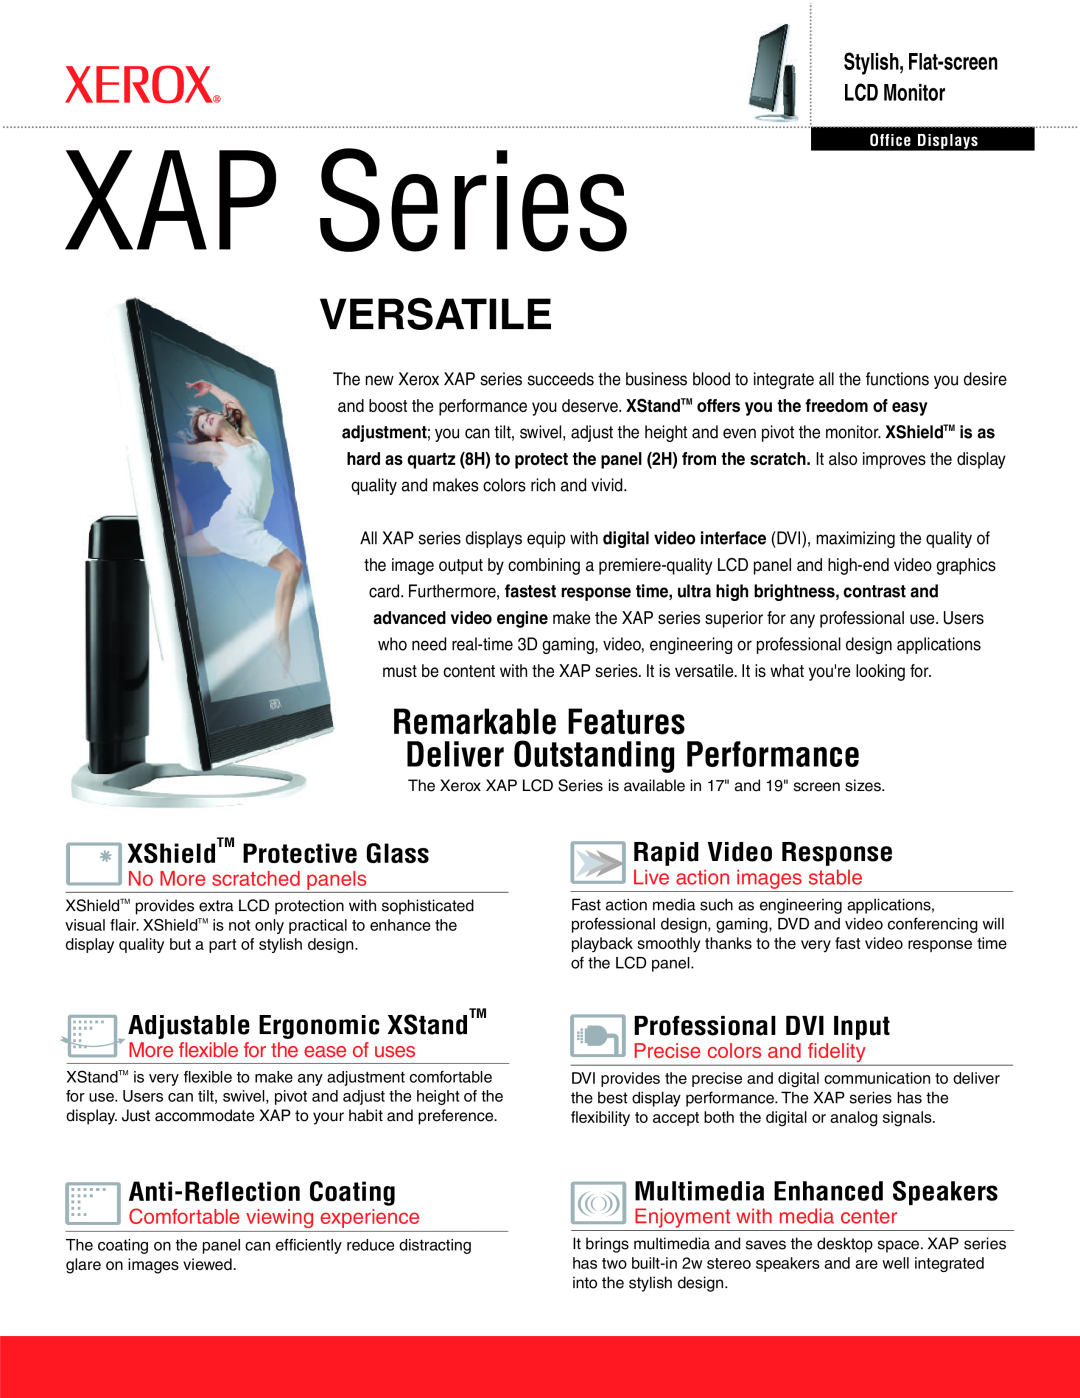 Xerox XAP Series manual Adjustable Ergonomic XStandTM, Professional DVI Input, Versatile, Remarkable Features 